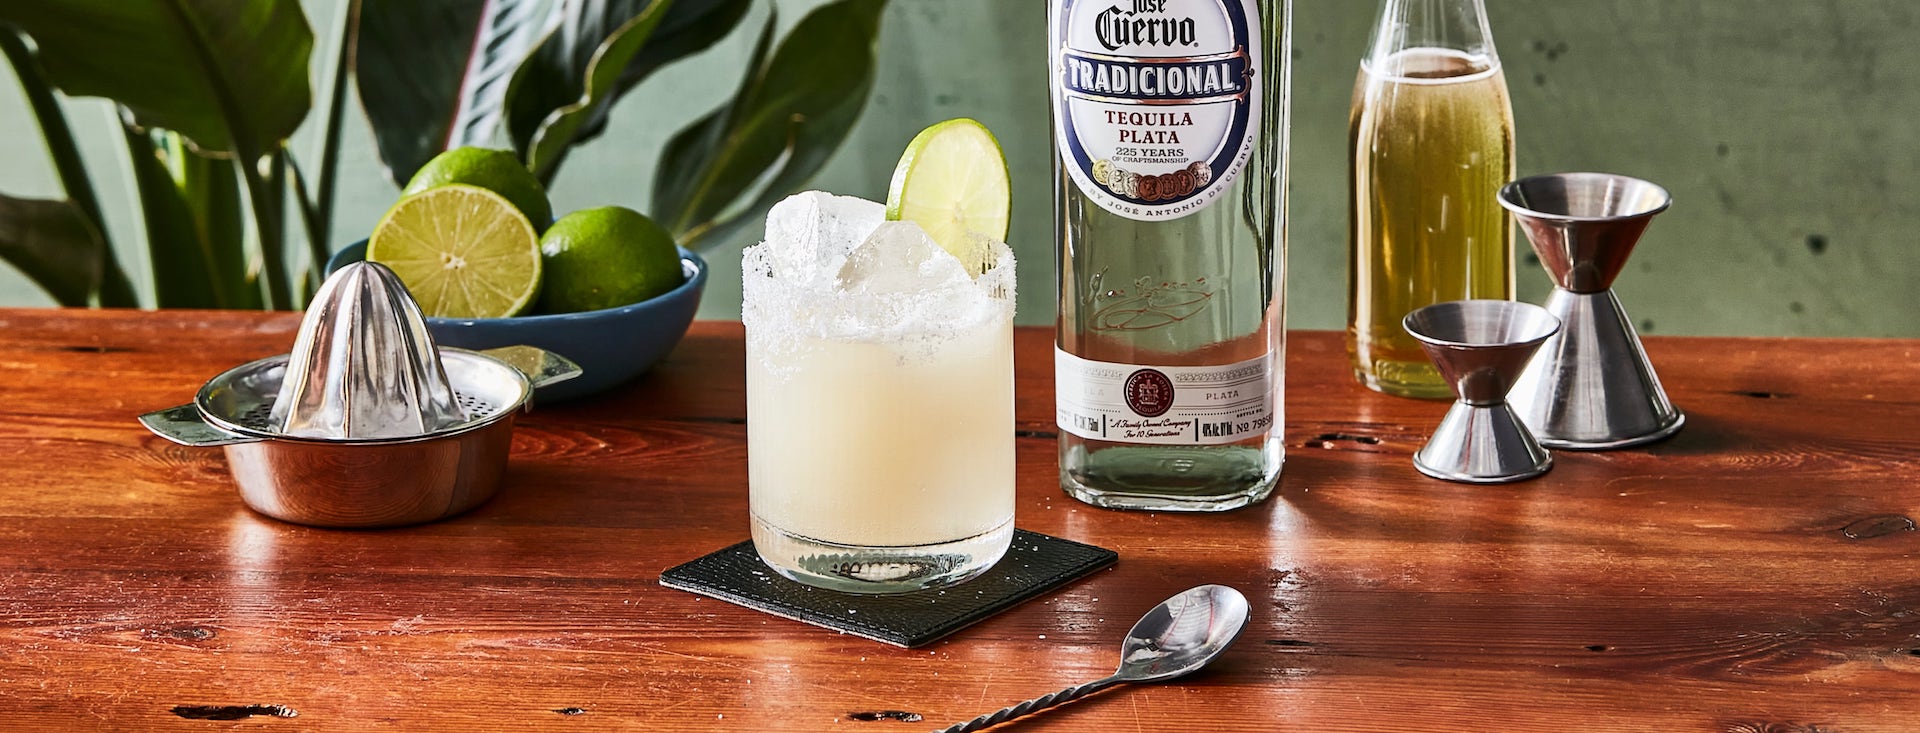 cuervo cocktail classic marg